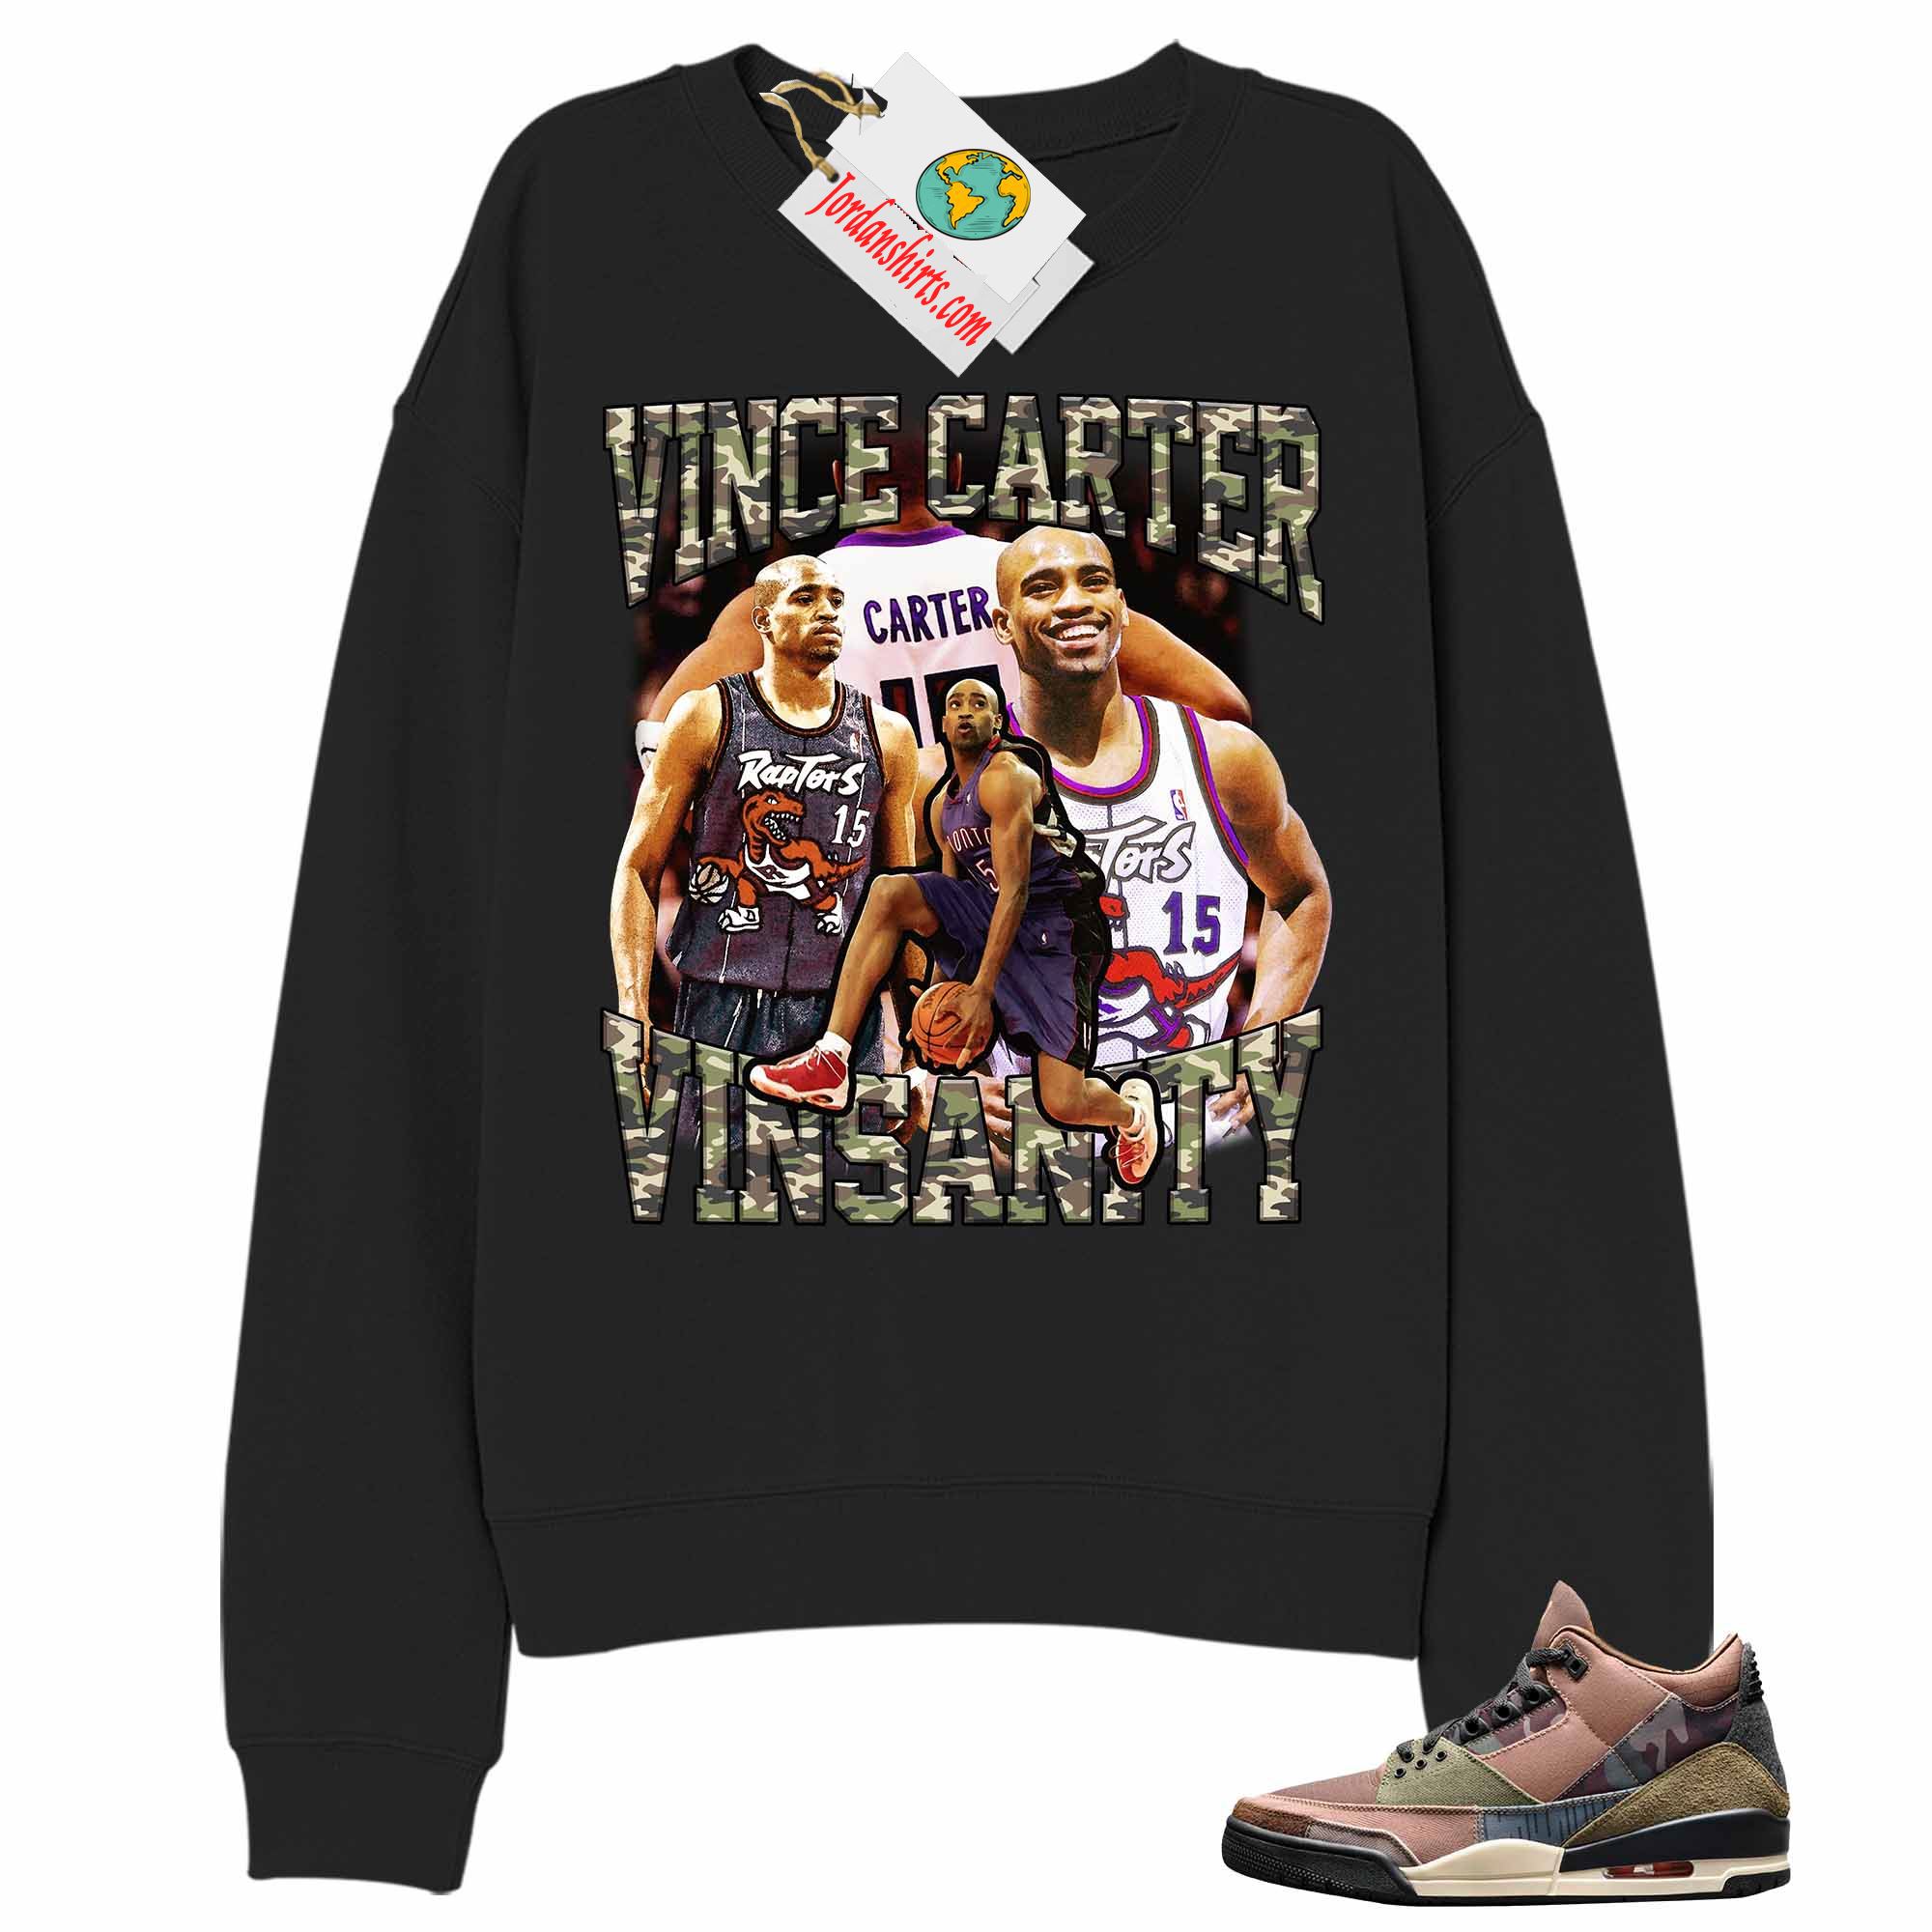 Jordan 3 Sweatshirt, Vince Carter Vinsanity Basketball 90s Retro Vintage Black Sweatshirt Air Jordan 3 Camo 3s Size Up To 5xl